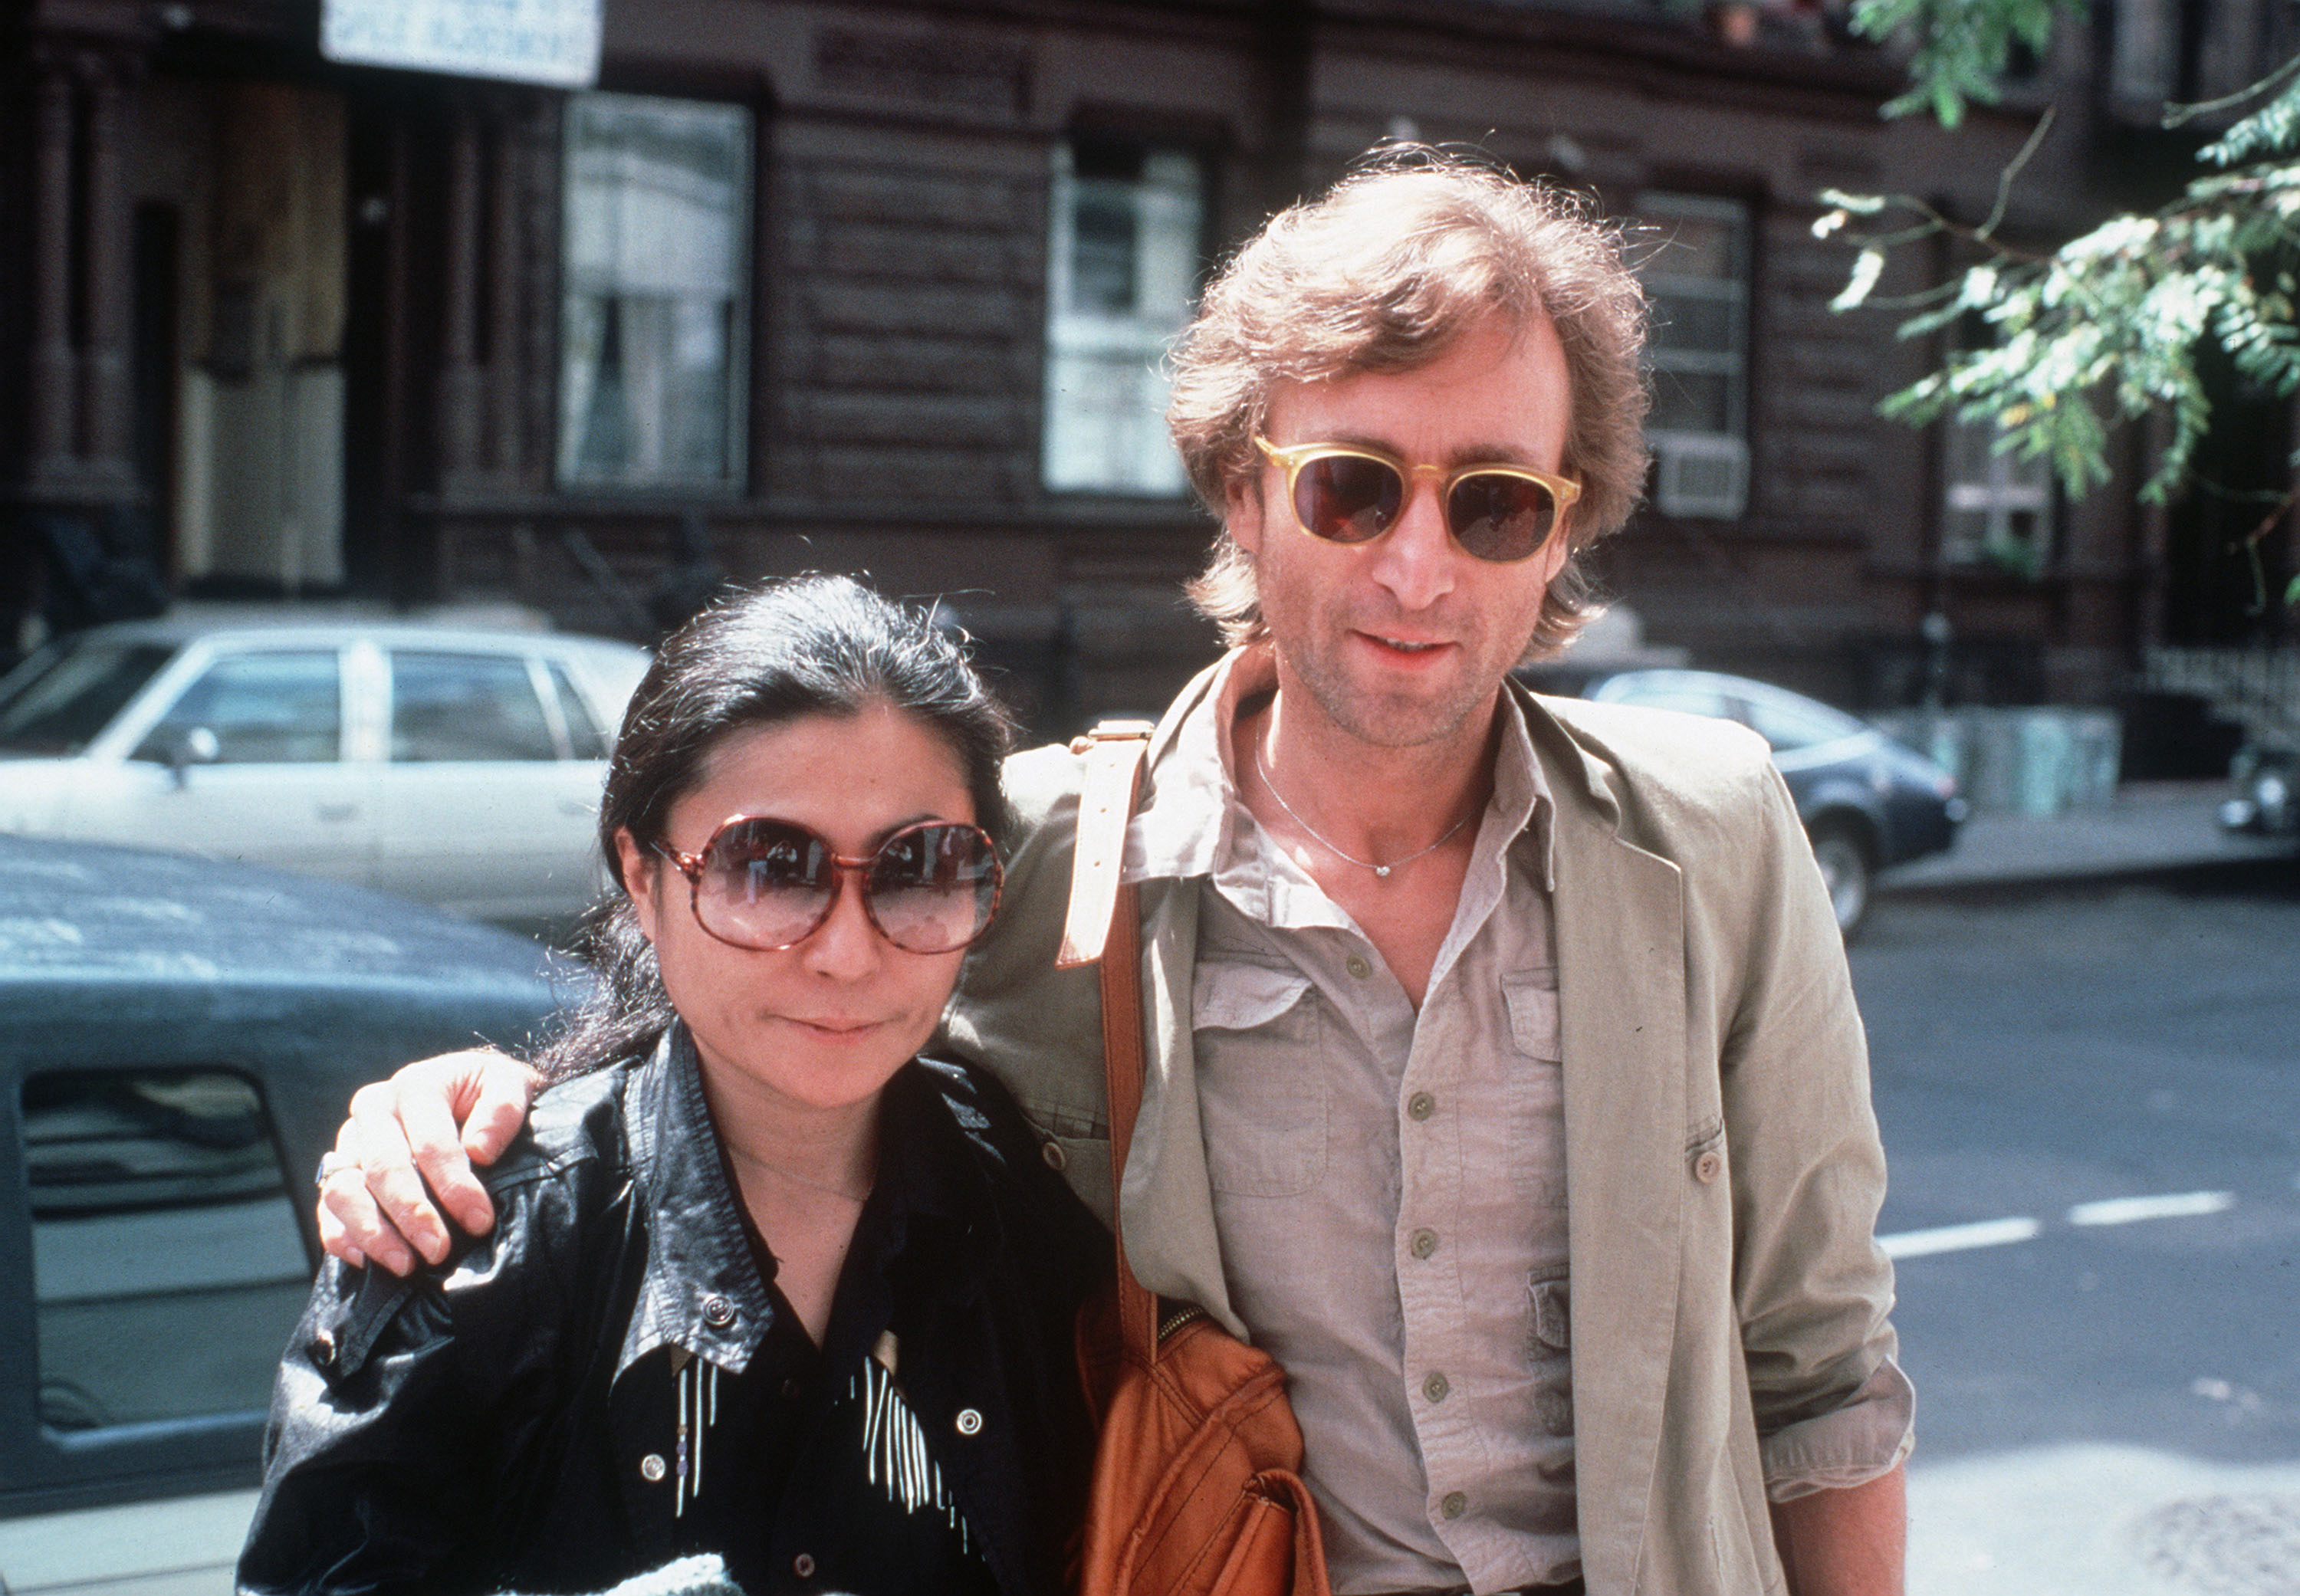 John Lennon and Yoko Ono  in sunglasses on a sunny day, new york city street